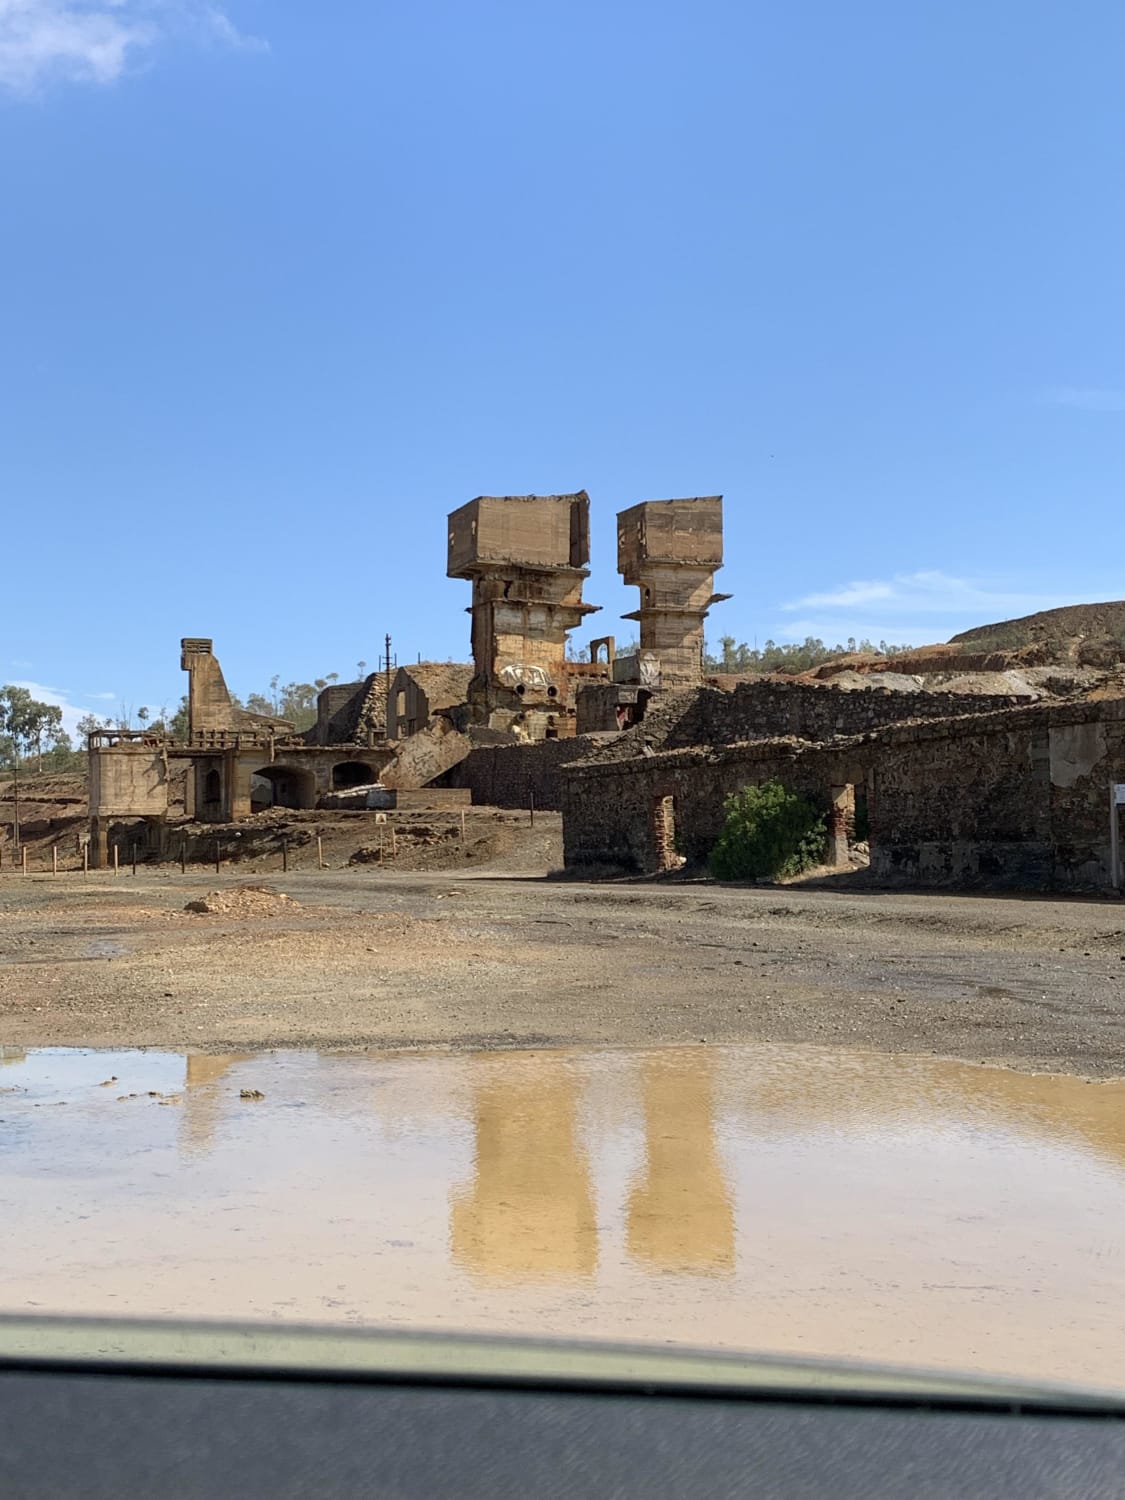 Abandoned mines truly create wasteland type of vibes